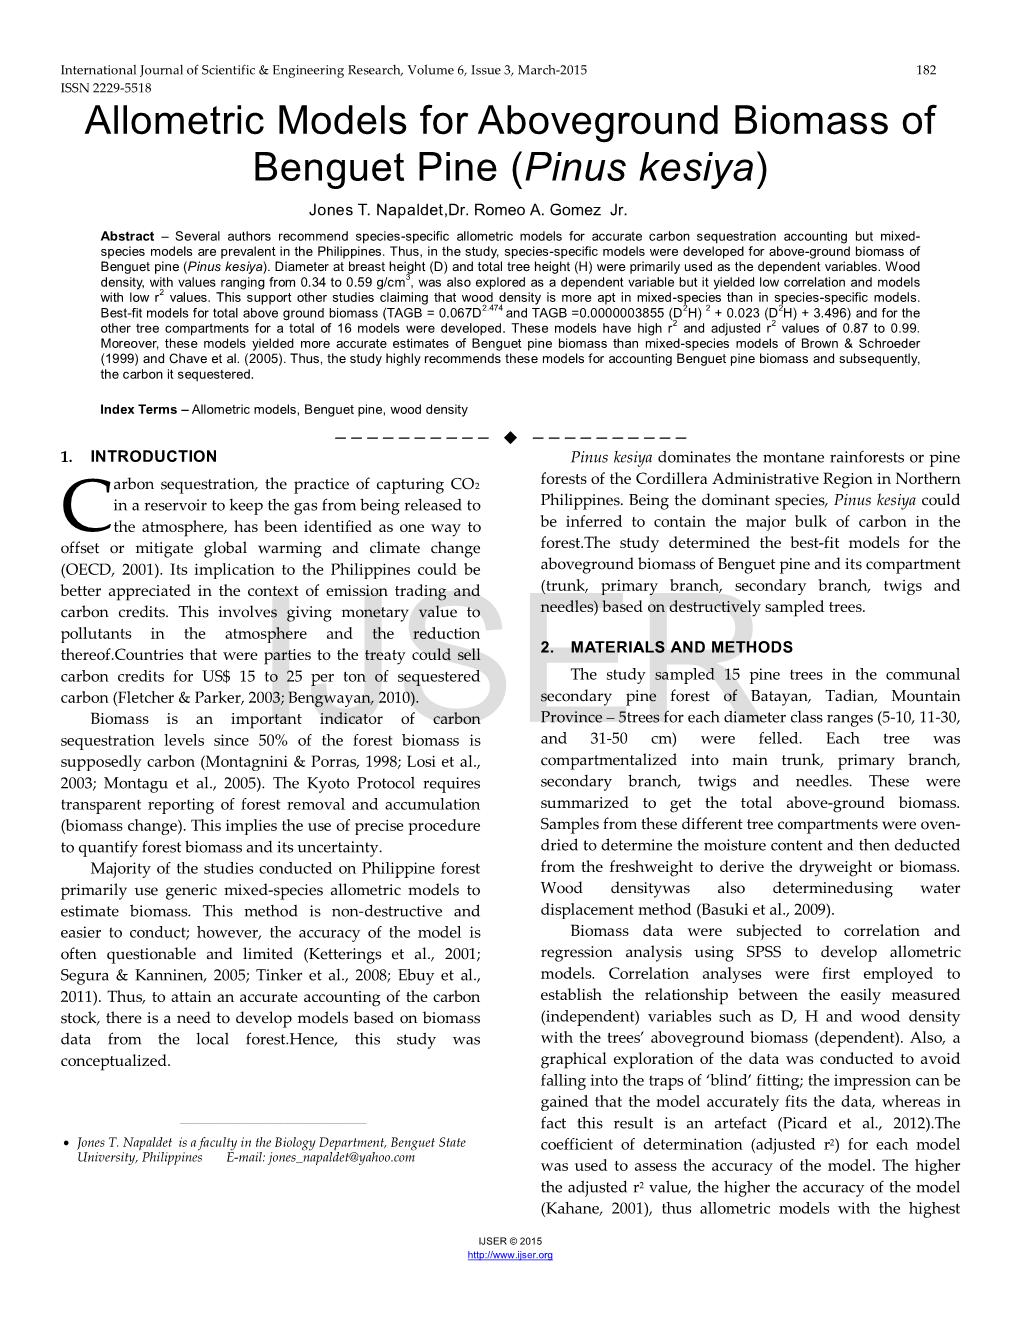 Allometric Models for Aboveground Biomass of Benguet Pine (Pinus Kesiya) Jones T